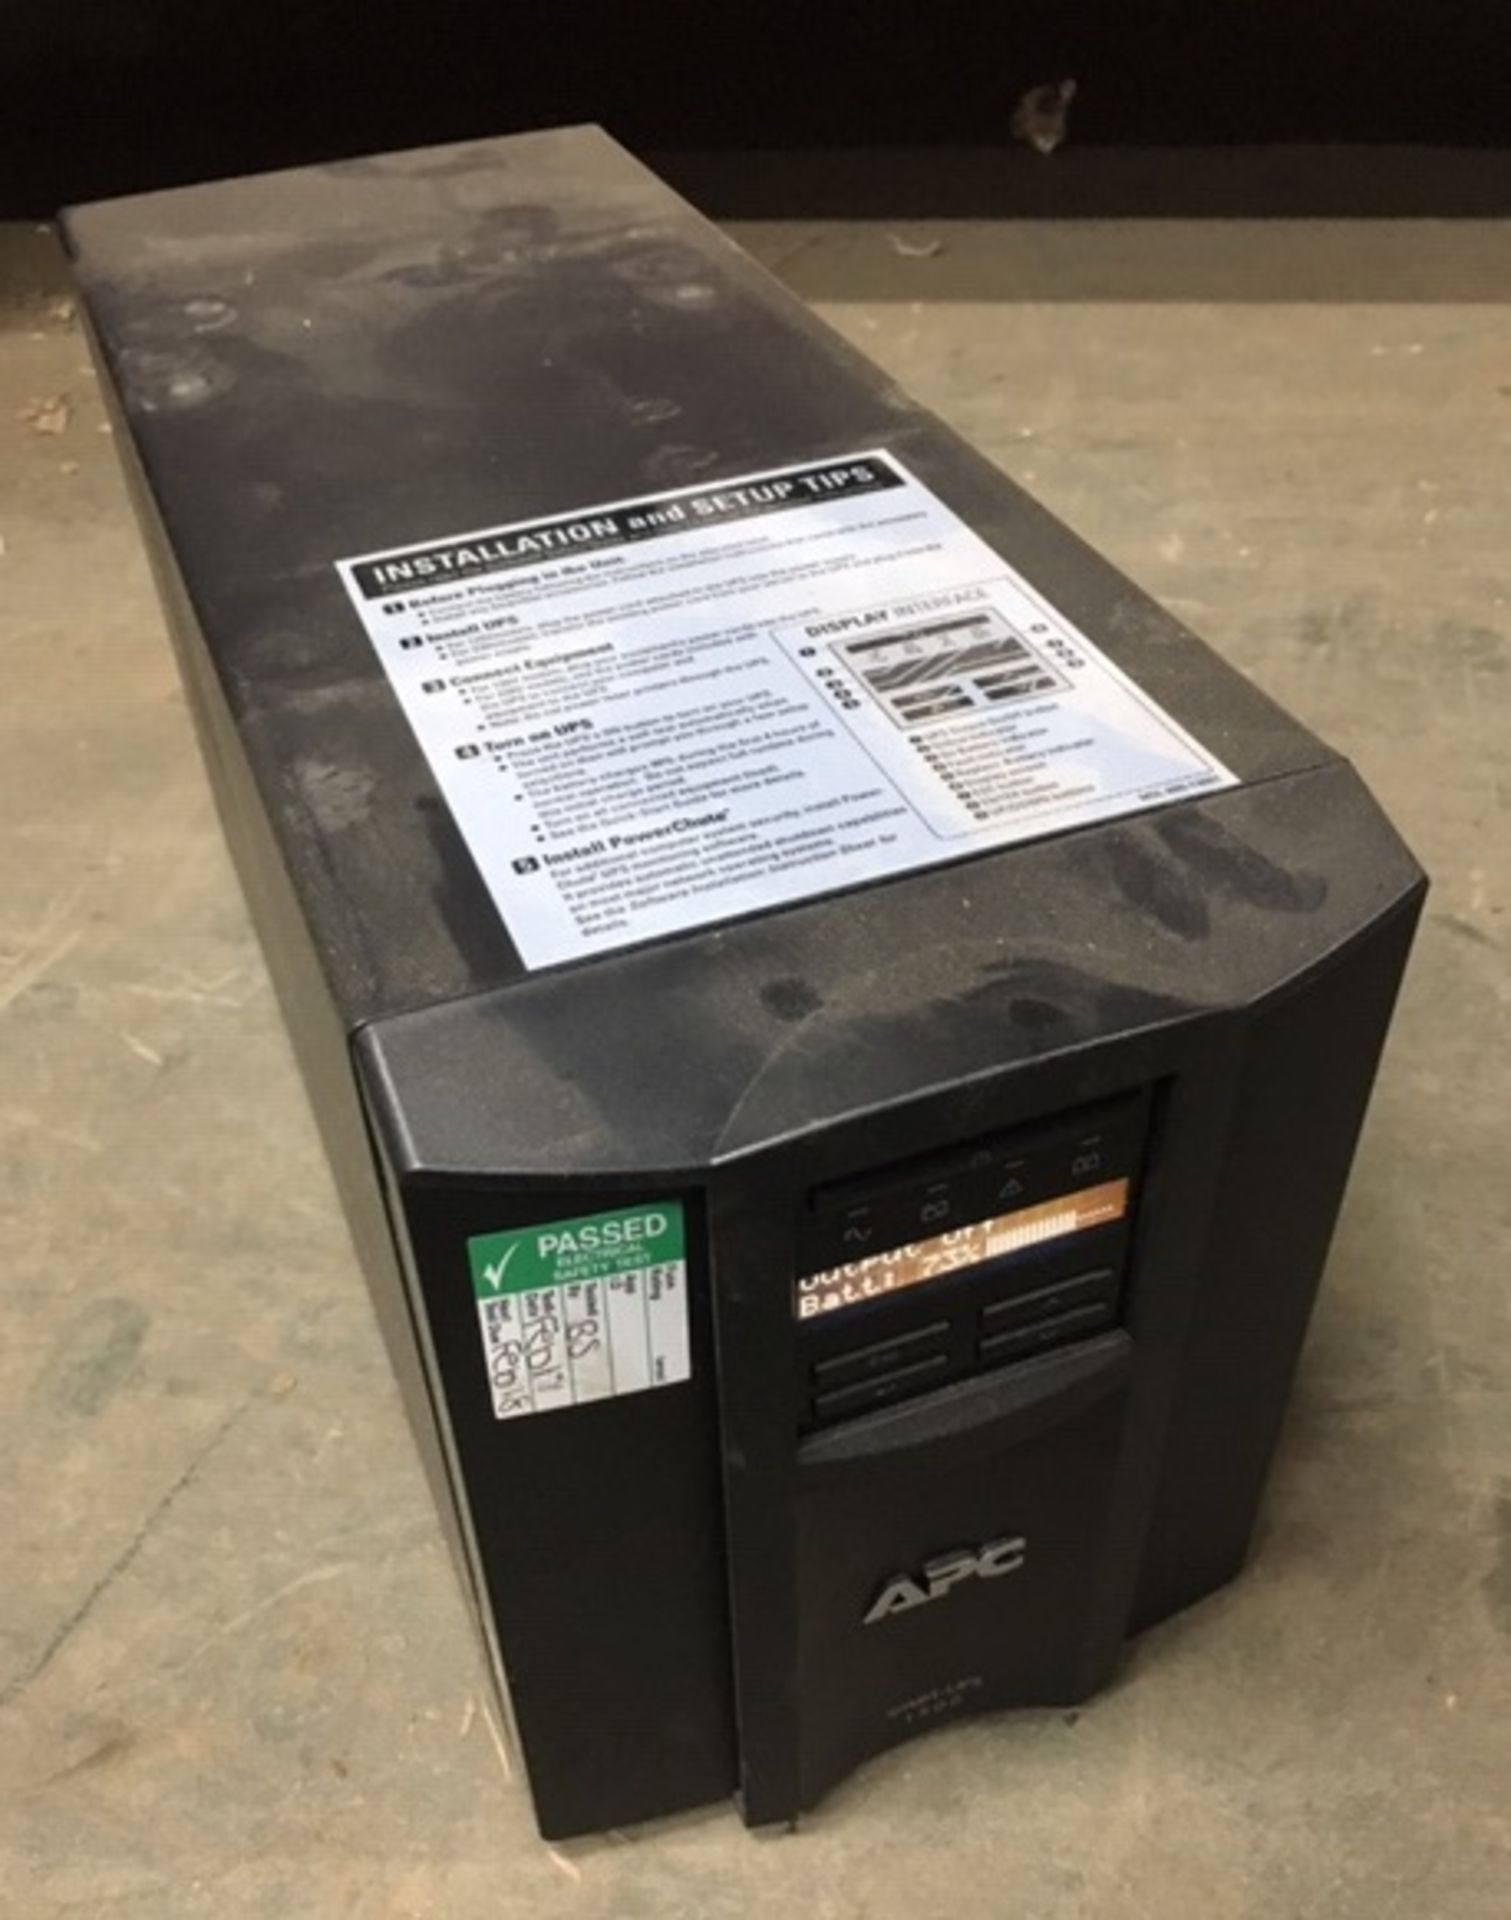 APC Smart-UPS 1500 Uninterruptible Power Supply - Image 2 of 6